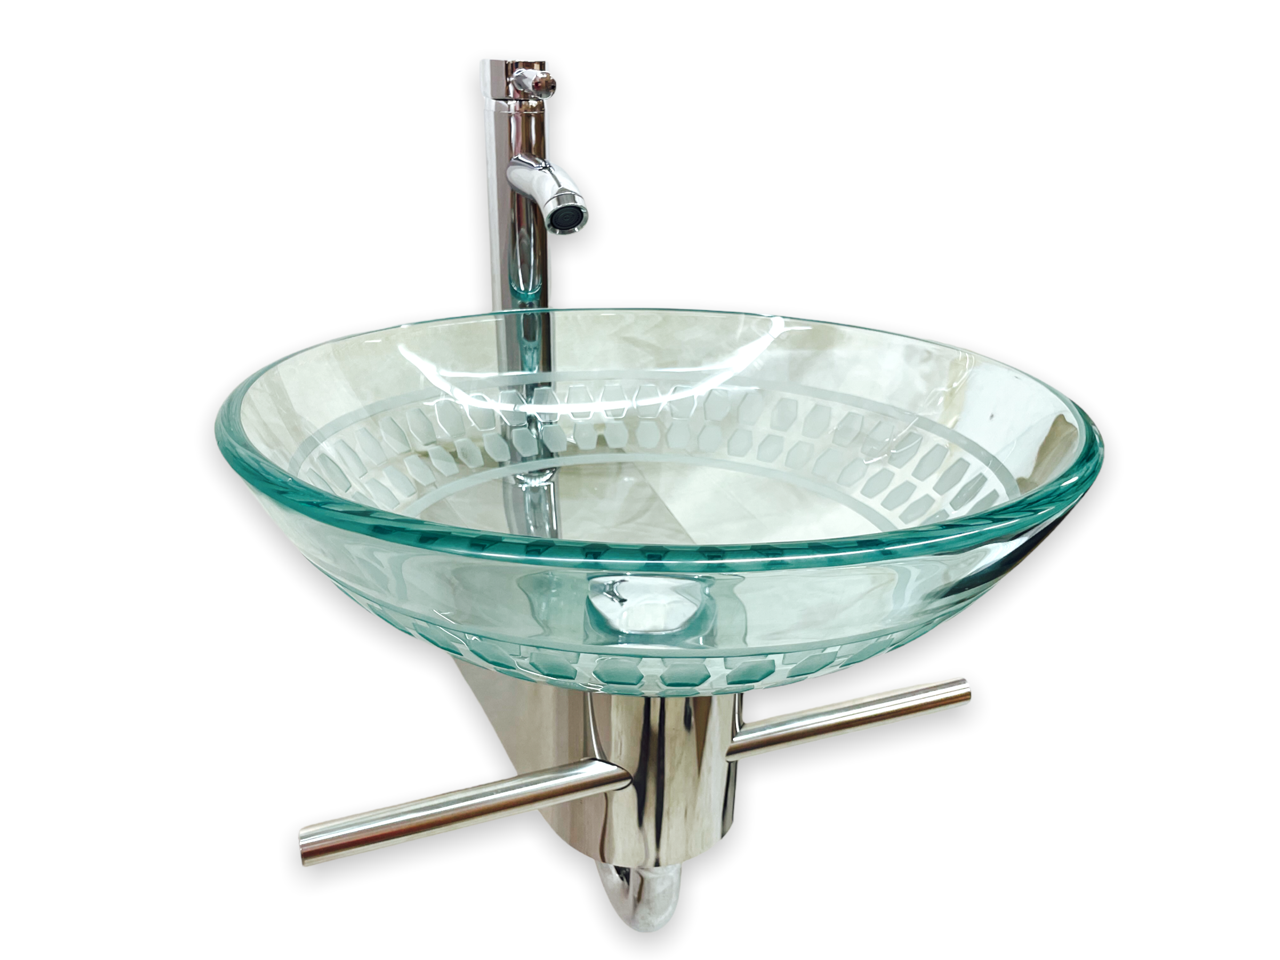 Lorixon LV-002RH Small Modern Bathroom Vanity Clear Tempered Glass